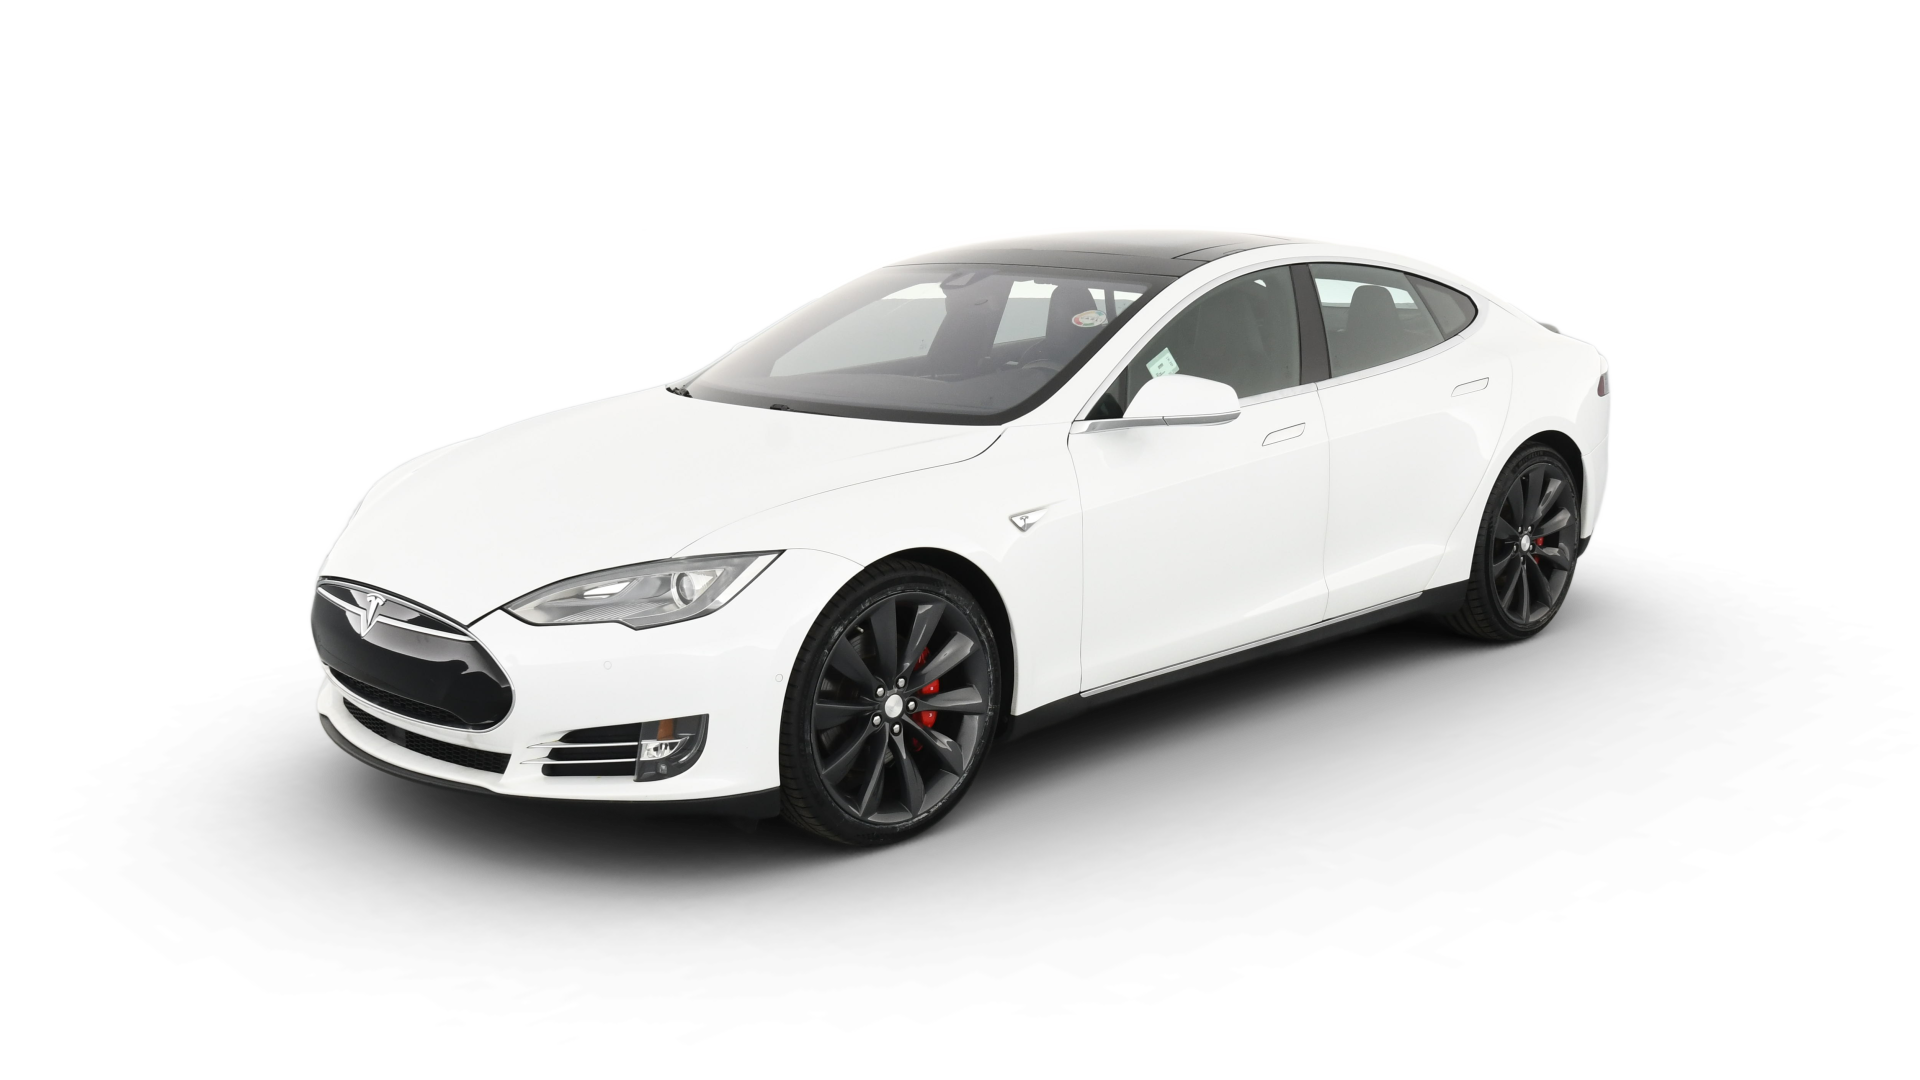 DETAILED: Tesla Model S P85D - Detailing Write-Ups - Adams Forums